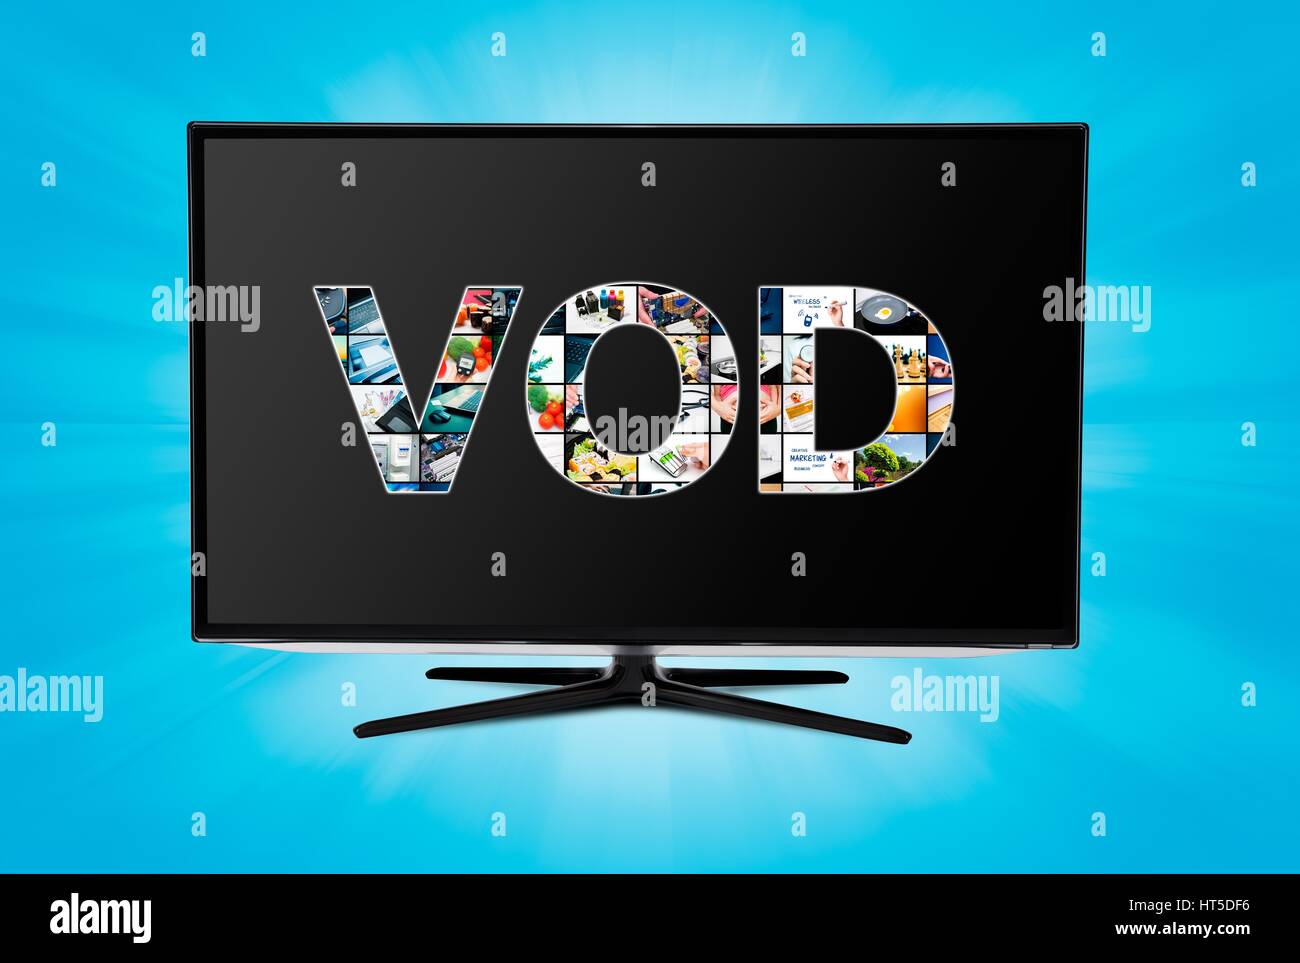 Video on demand VOD service on smart TV Stock Photo